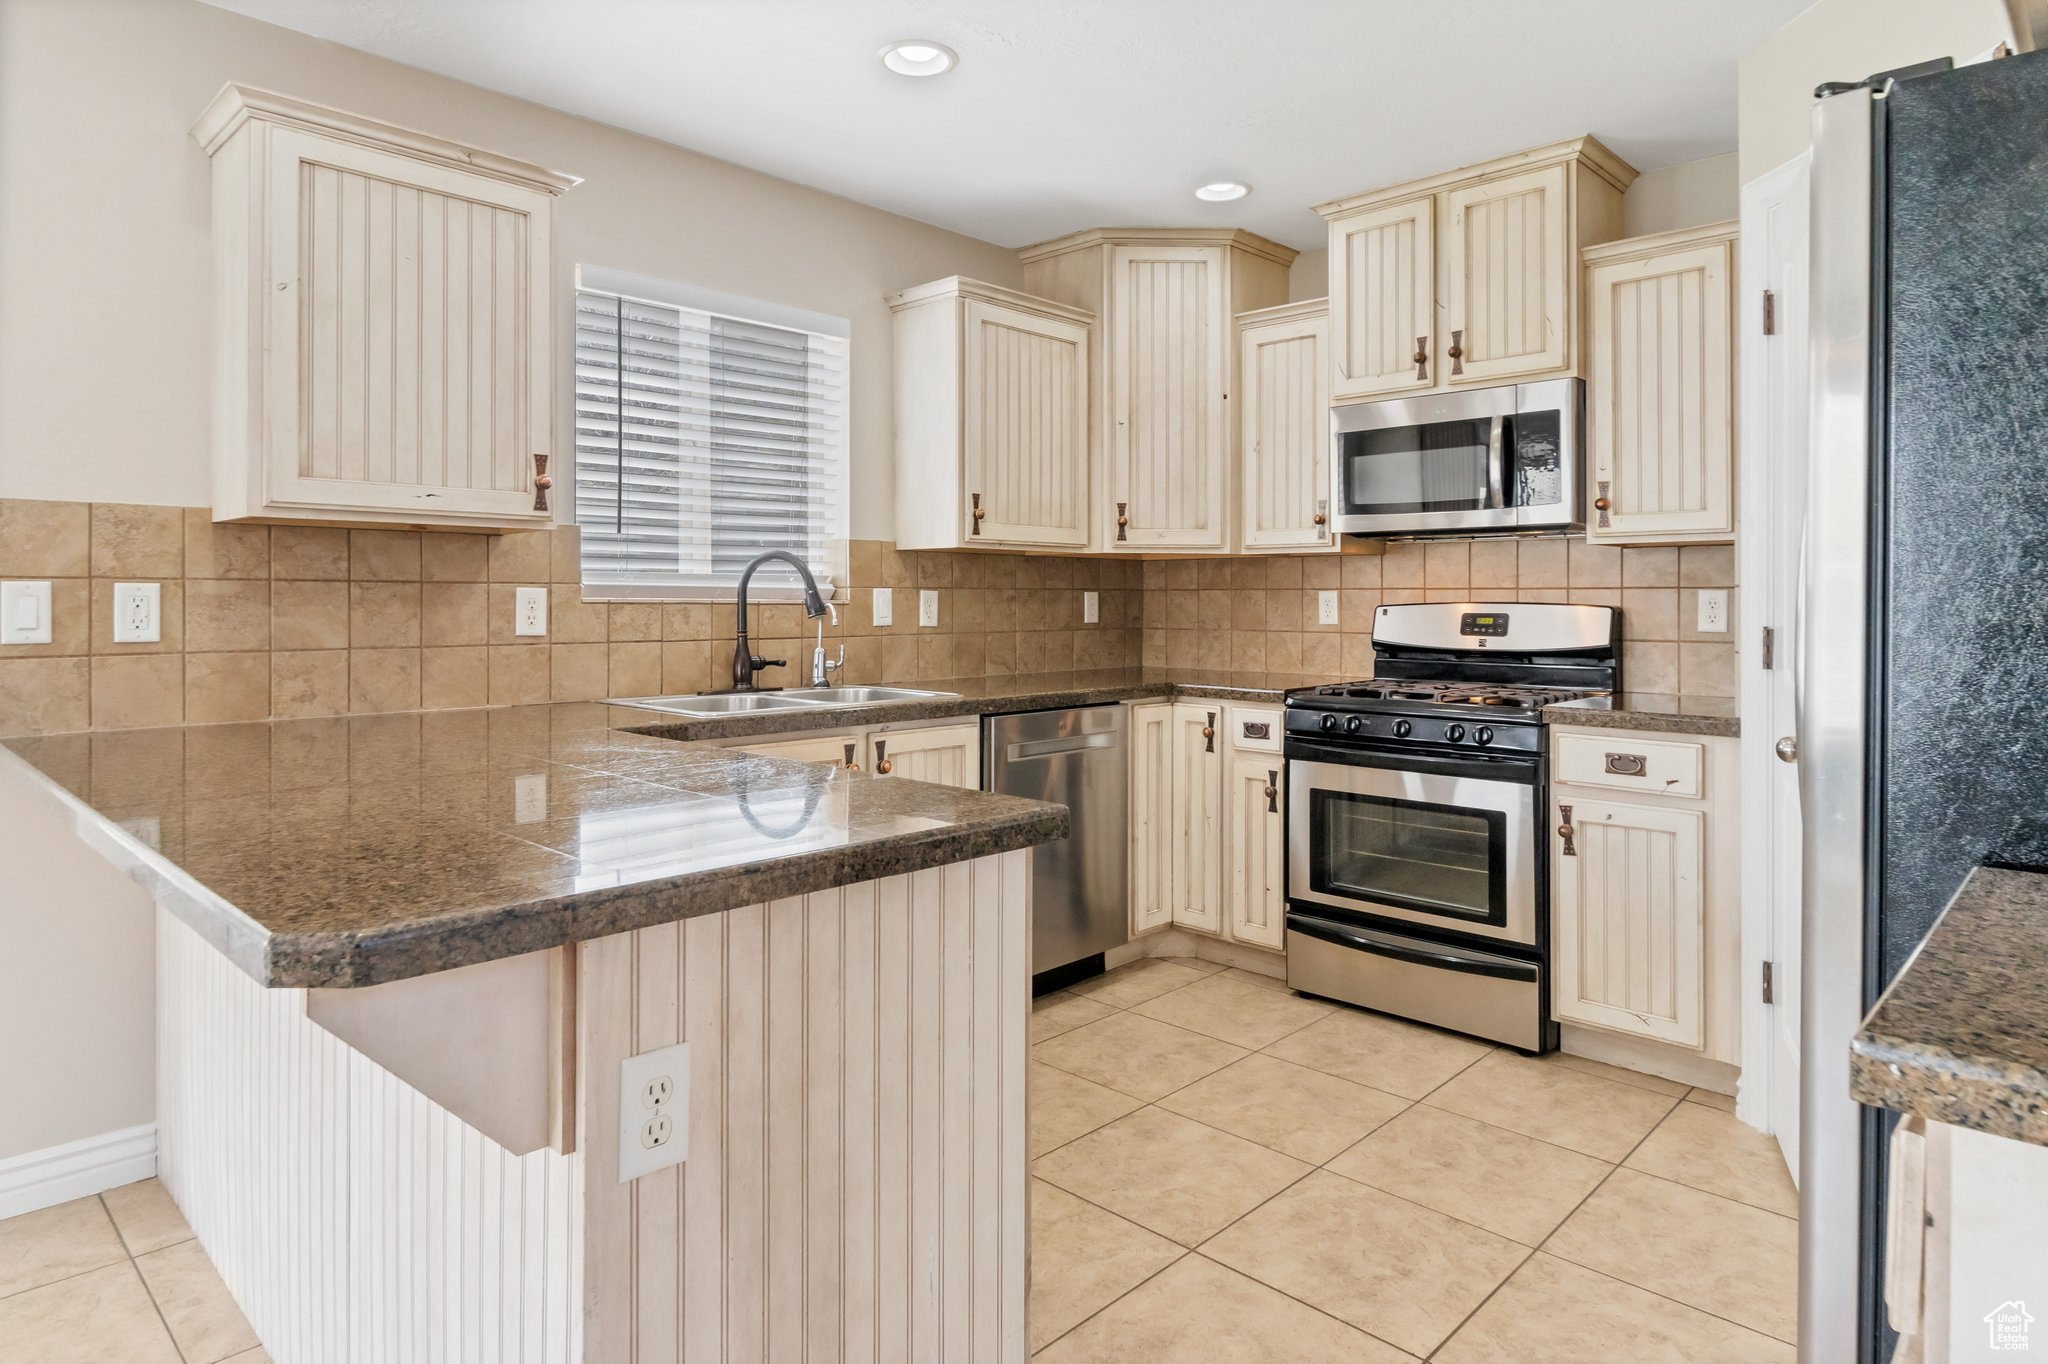 Kitchen featuring kitchen peninsula, backsplash, stainless steel appliances, light tile flooring, and sink